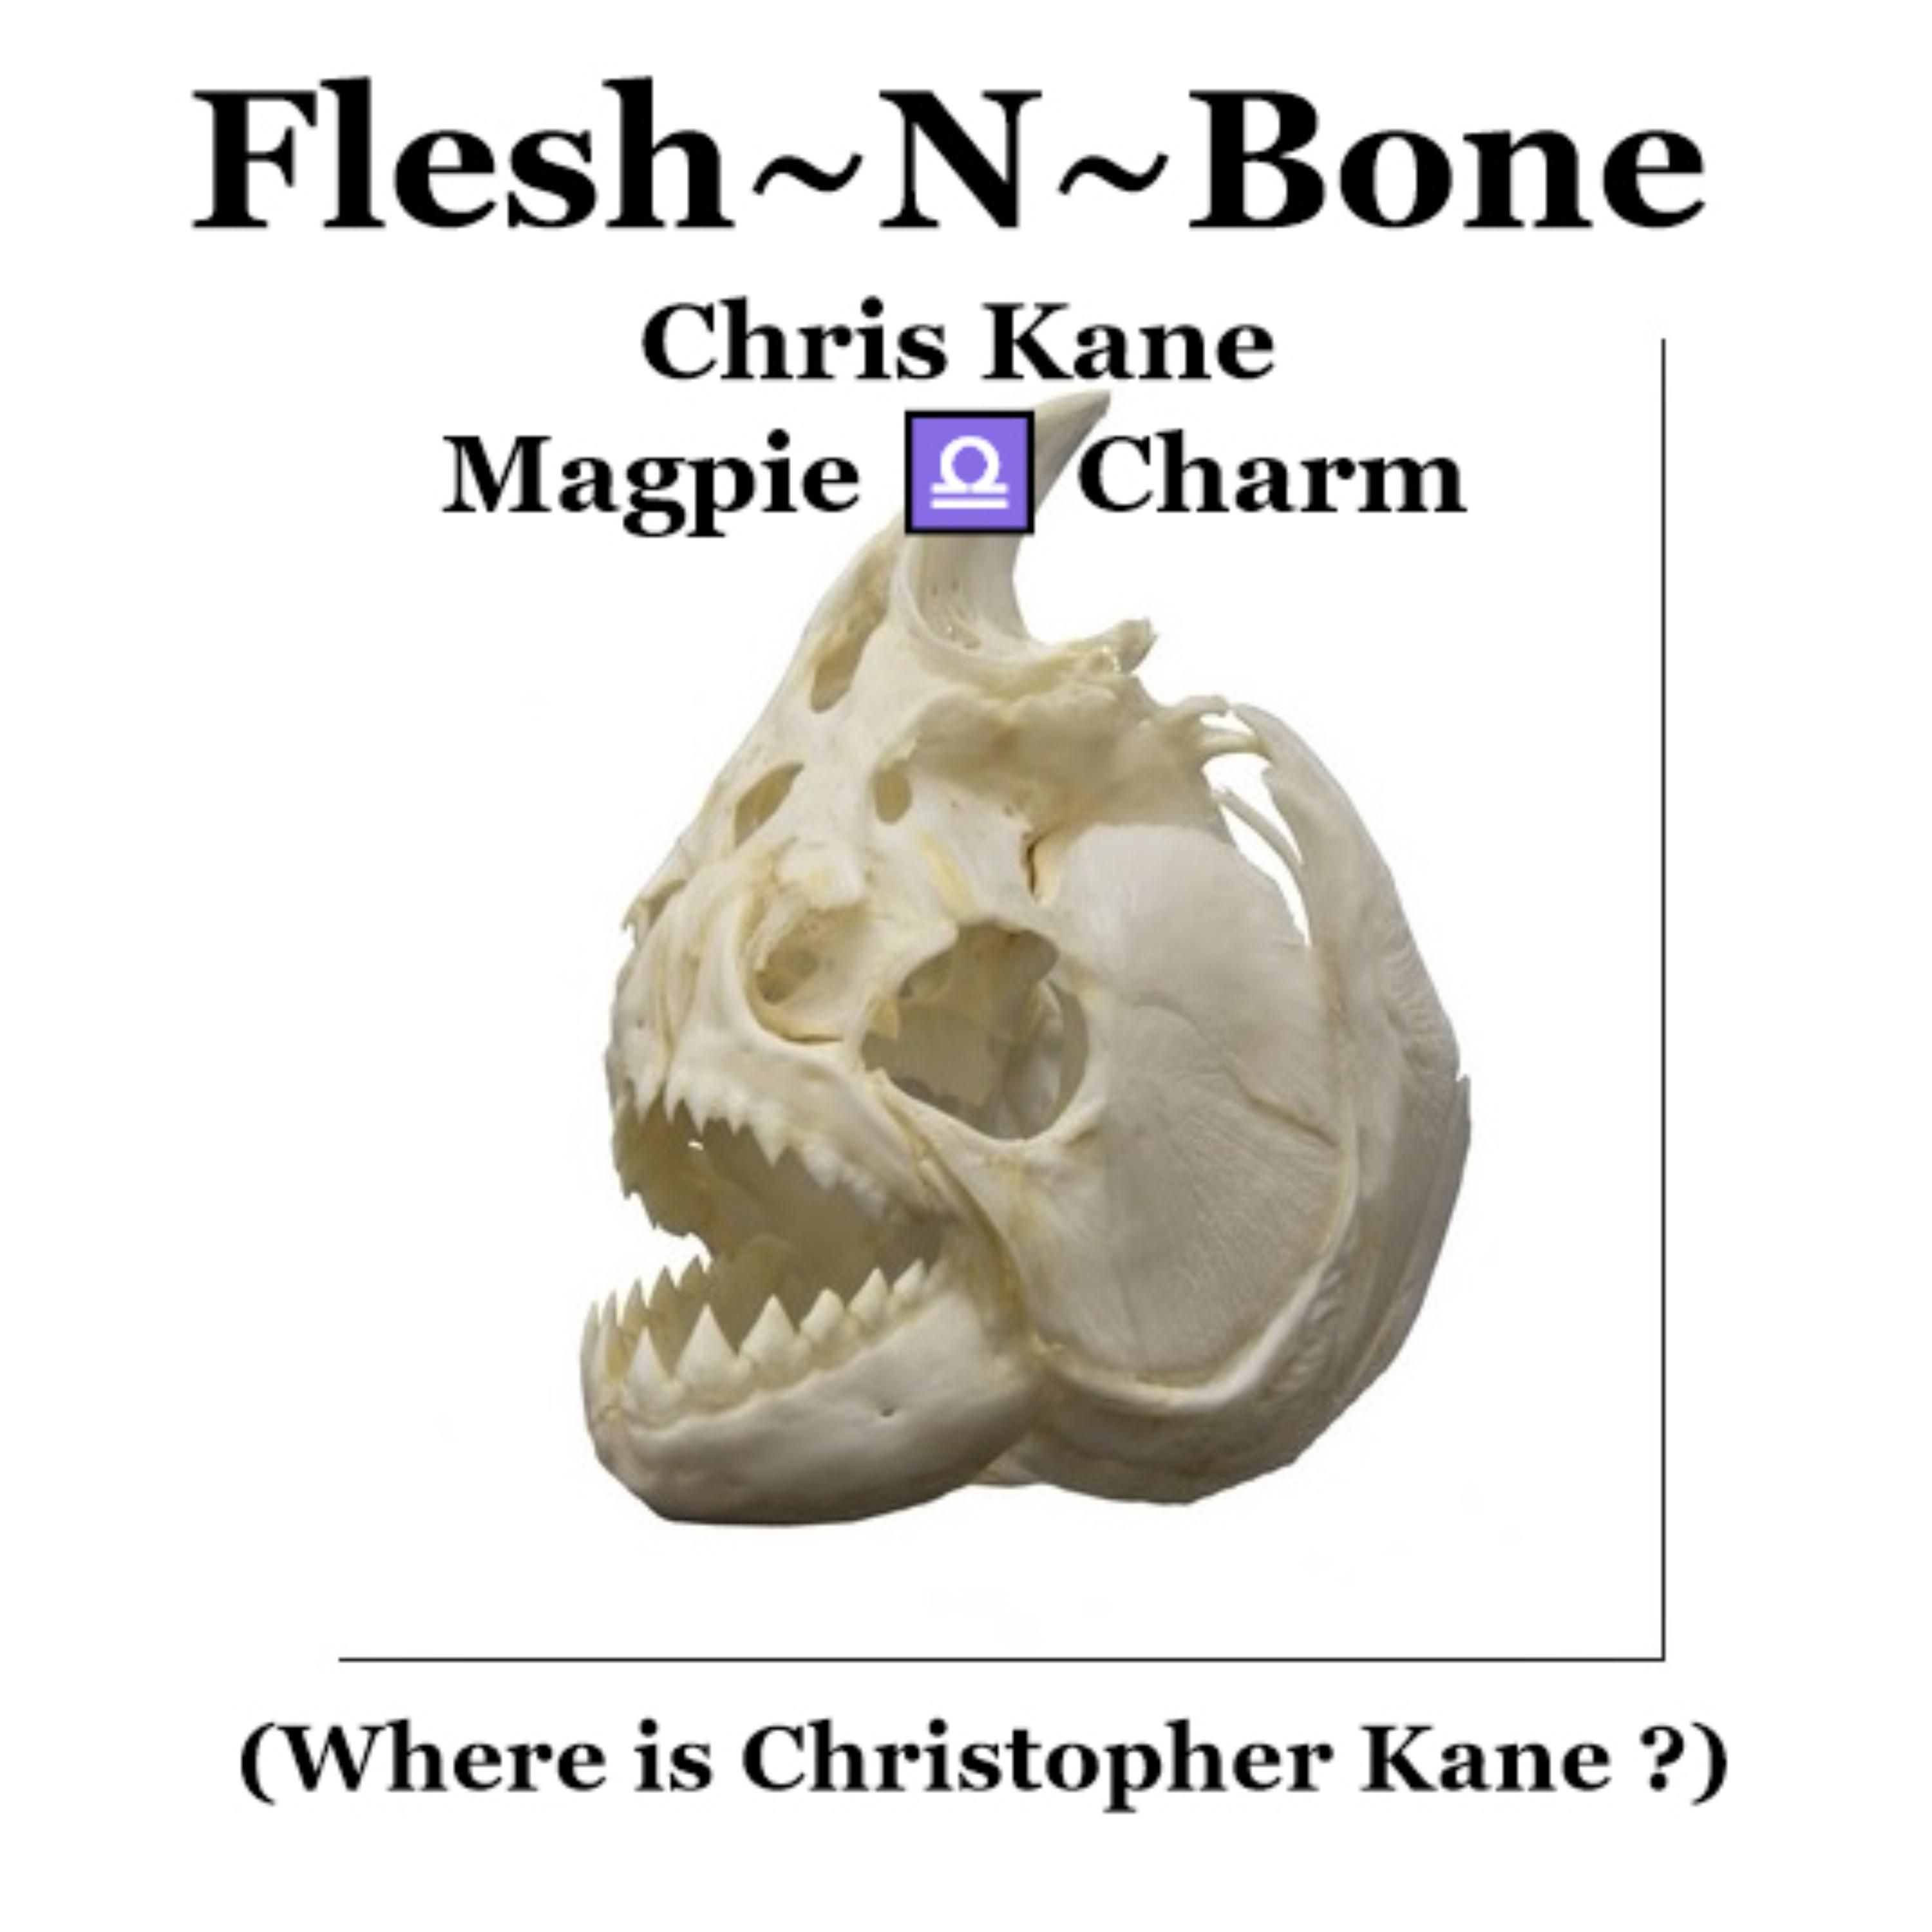 Flesh-N-Bone